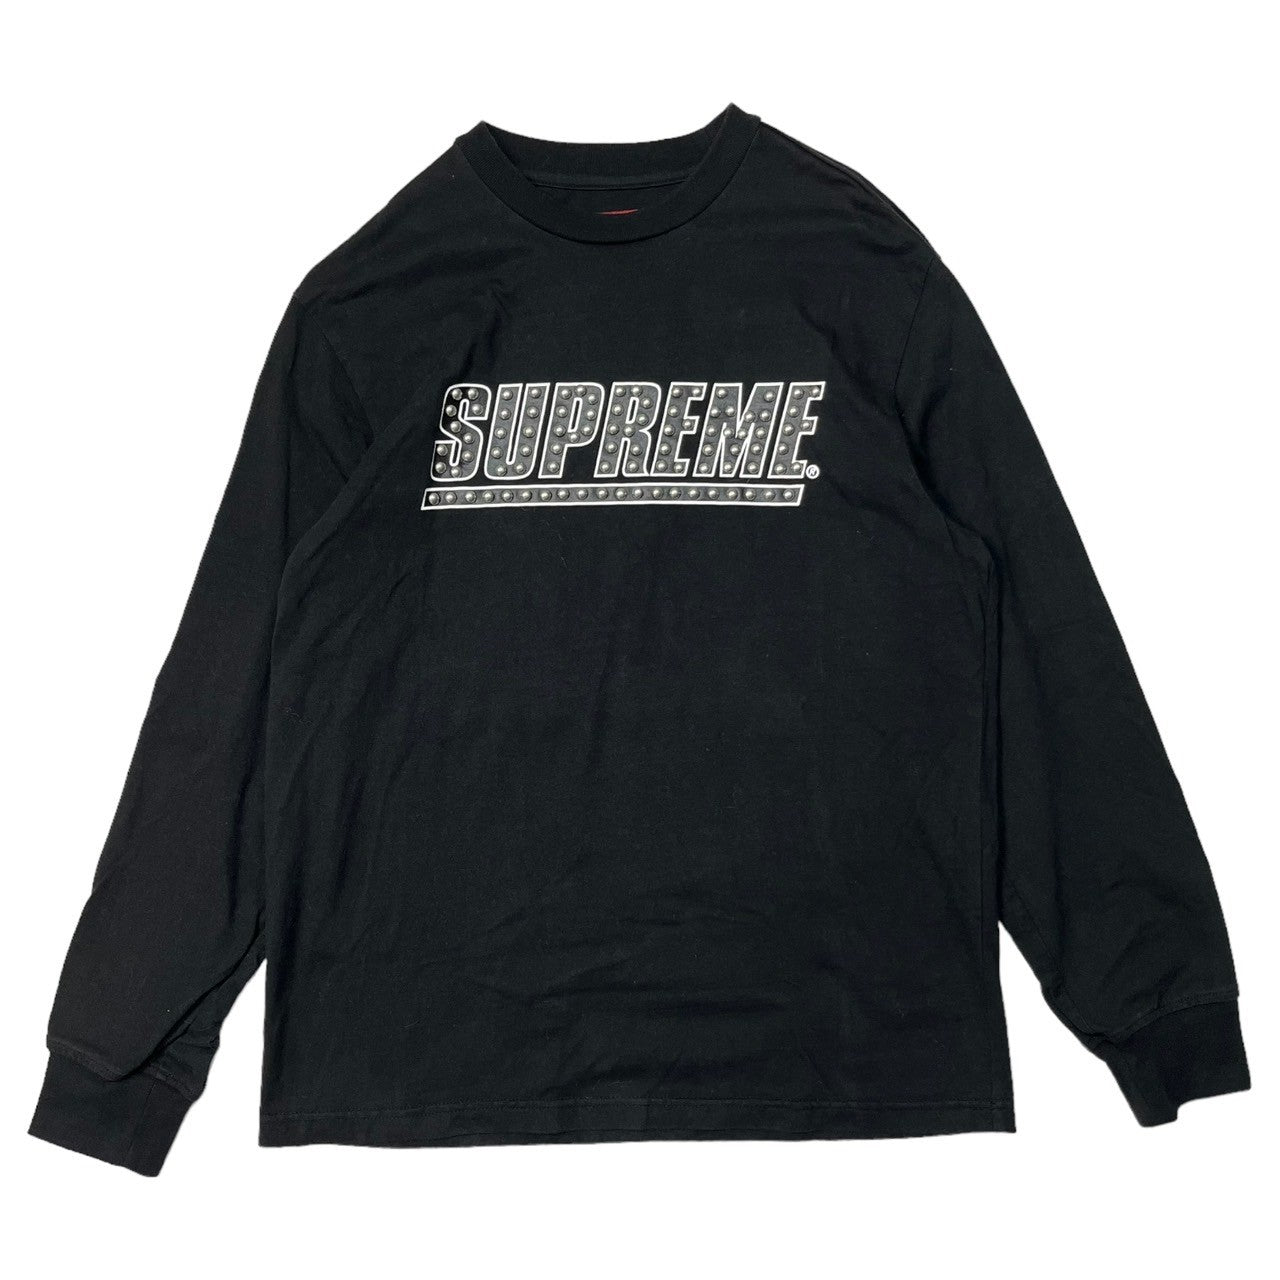 SUPREME(シュプリーム) 20SS Studded L/S Top Tee スタッズ ロゴ ロンT 長袖 カットソー Tシャツ S ブラック